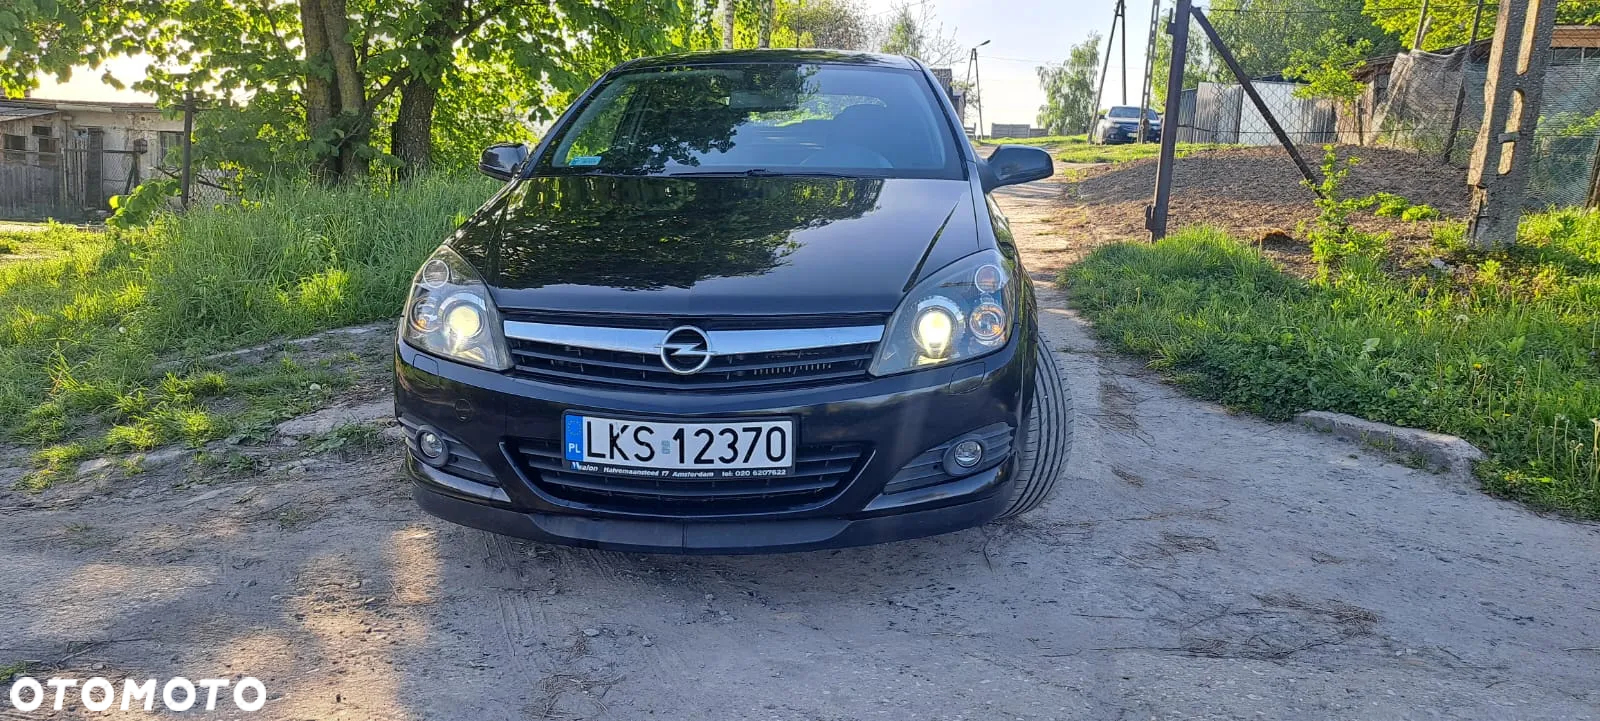 Opel Astra III GTC 1.9 CDTI - 14